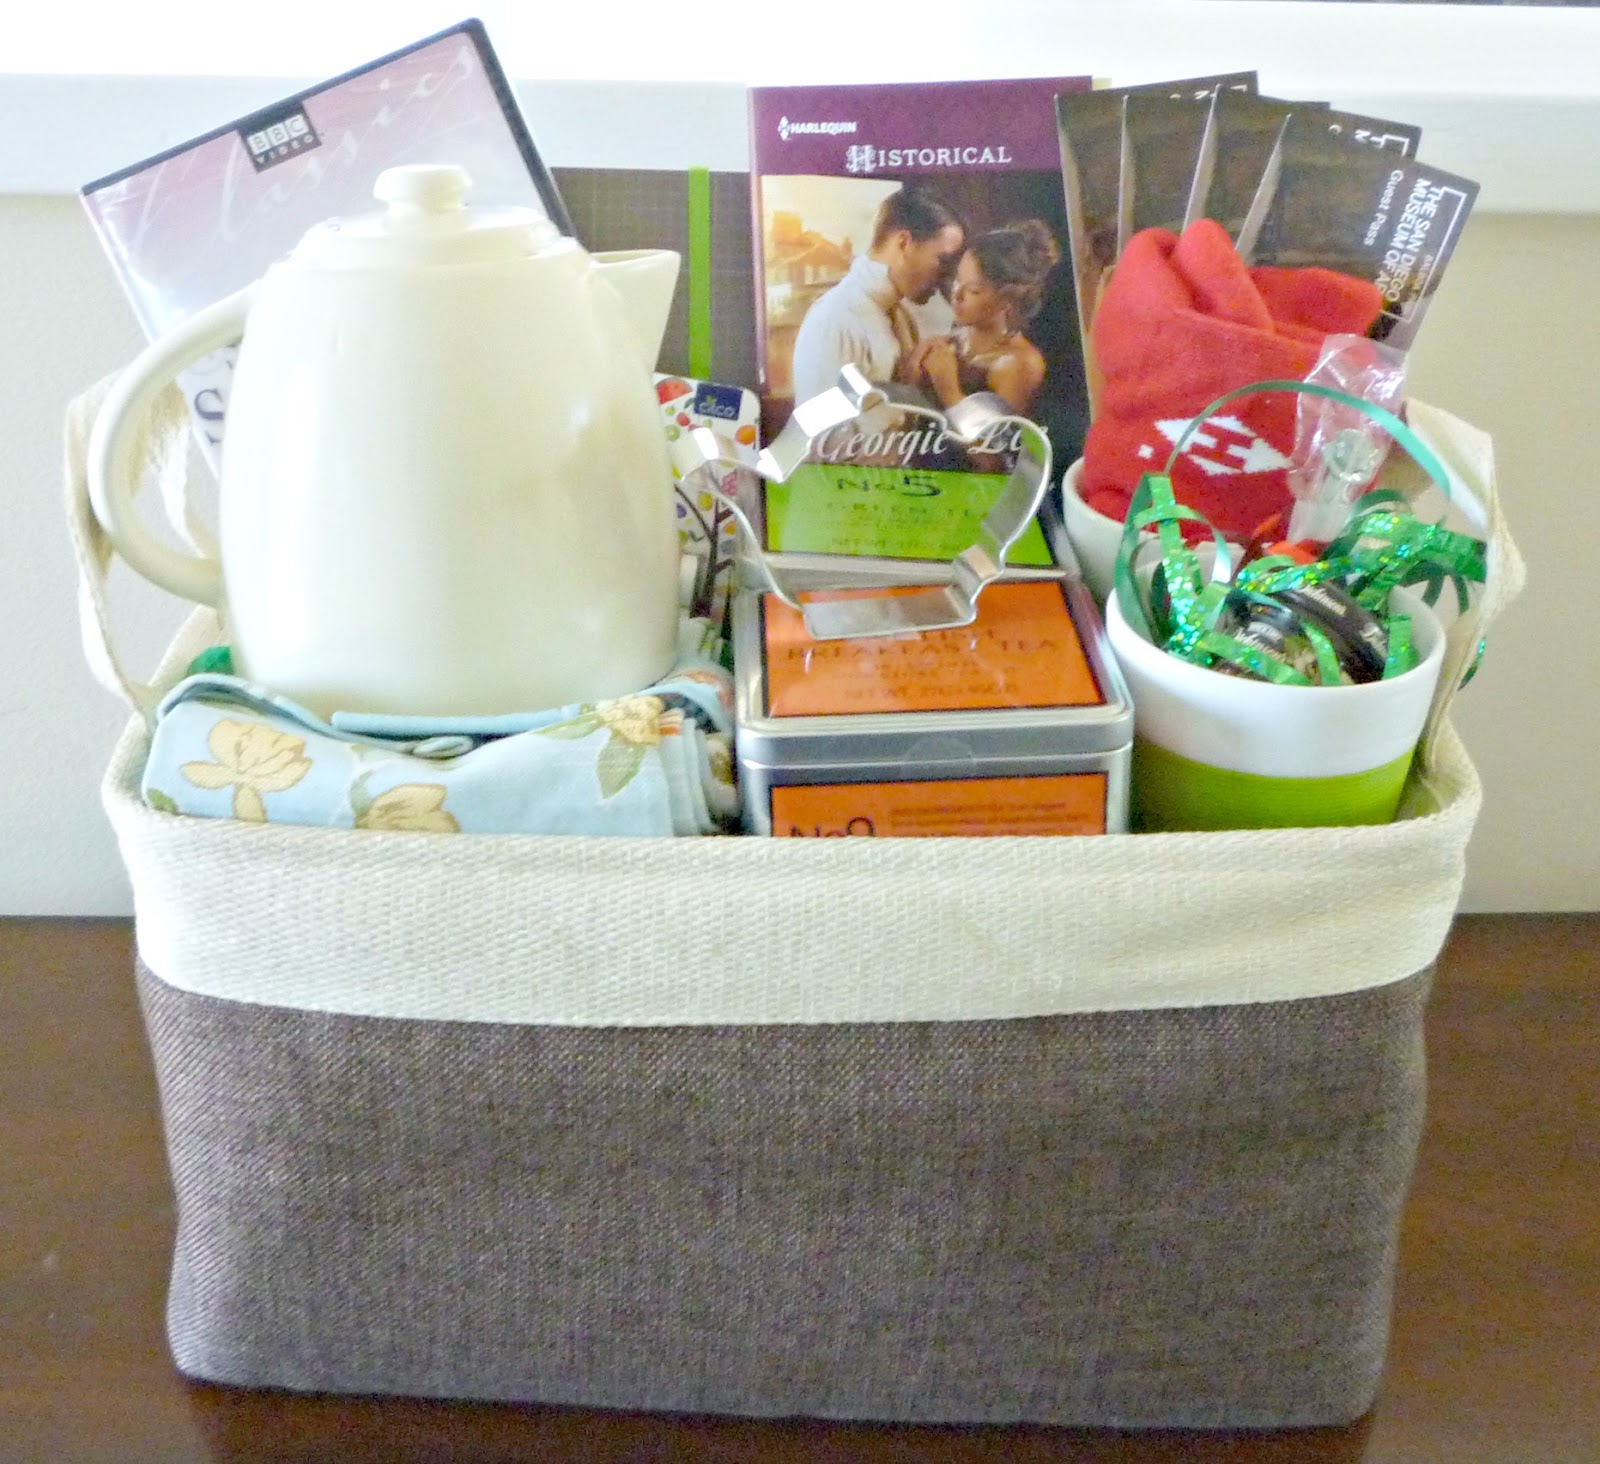 Tea Gift Basket